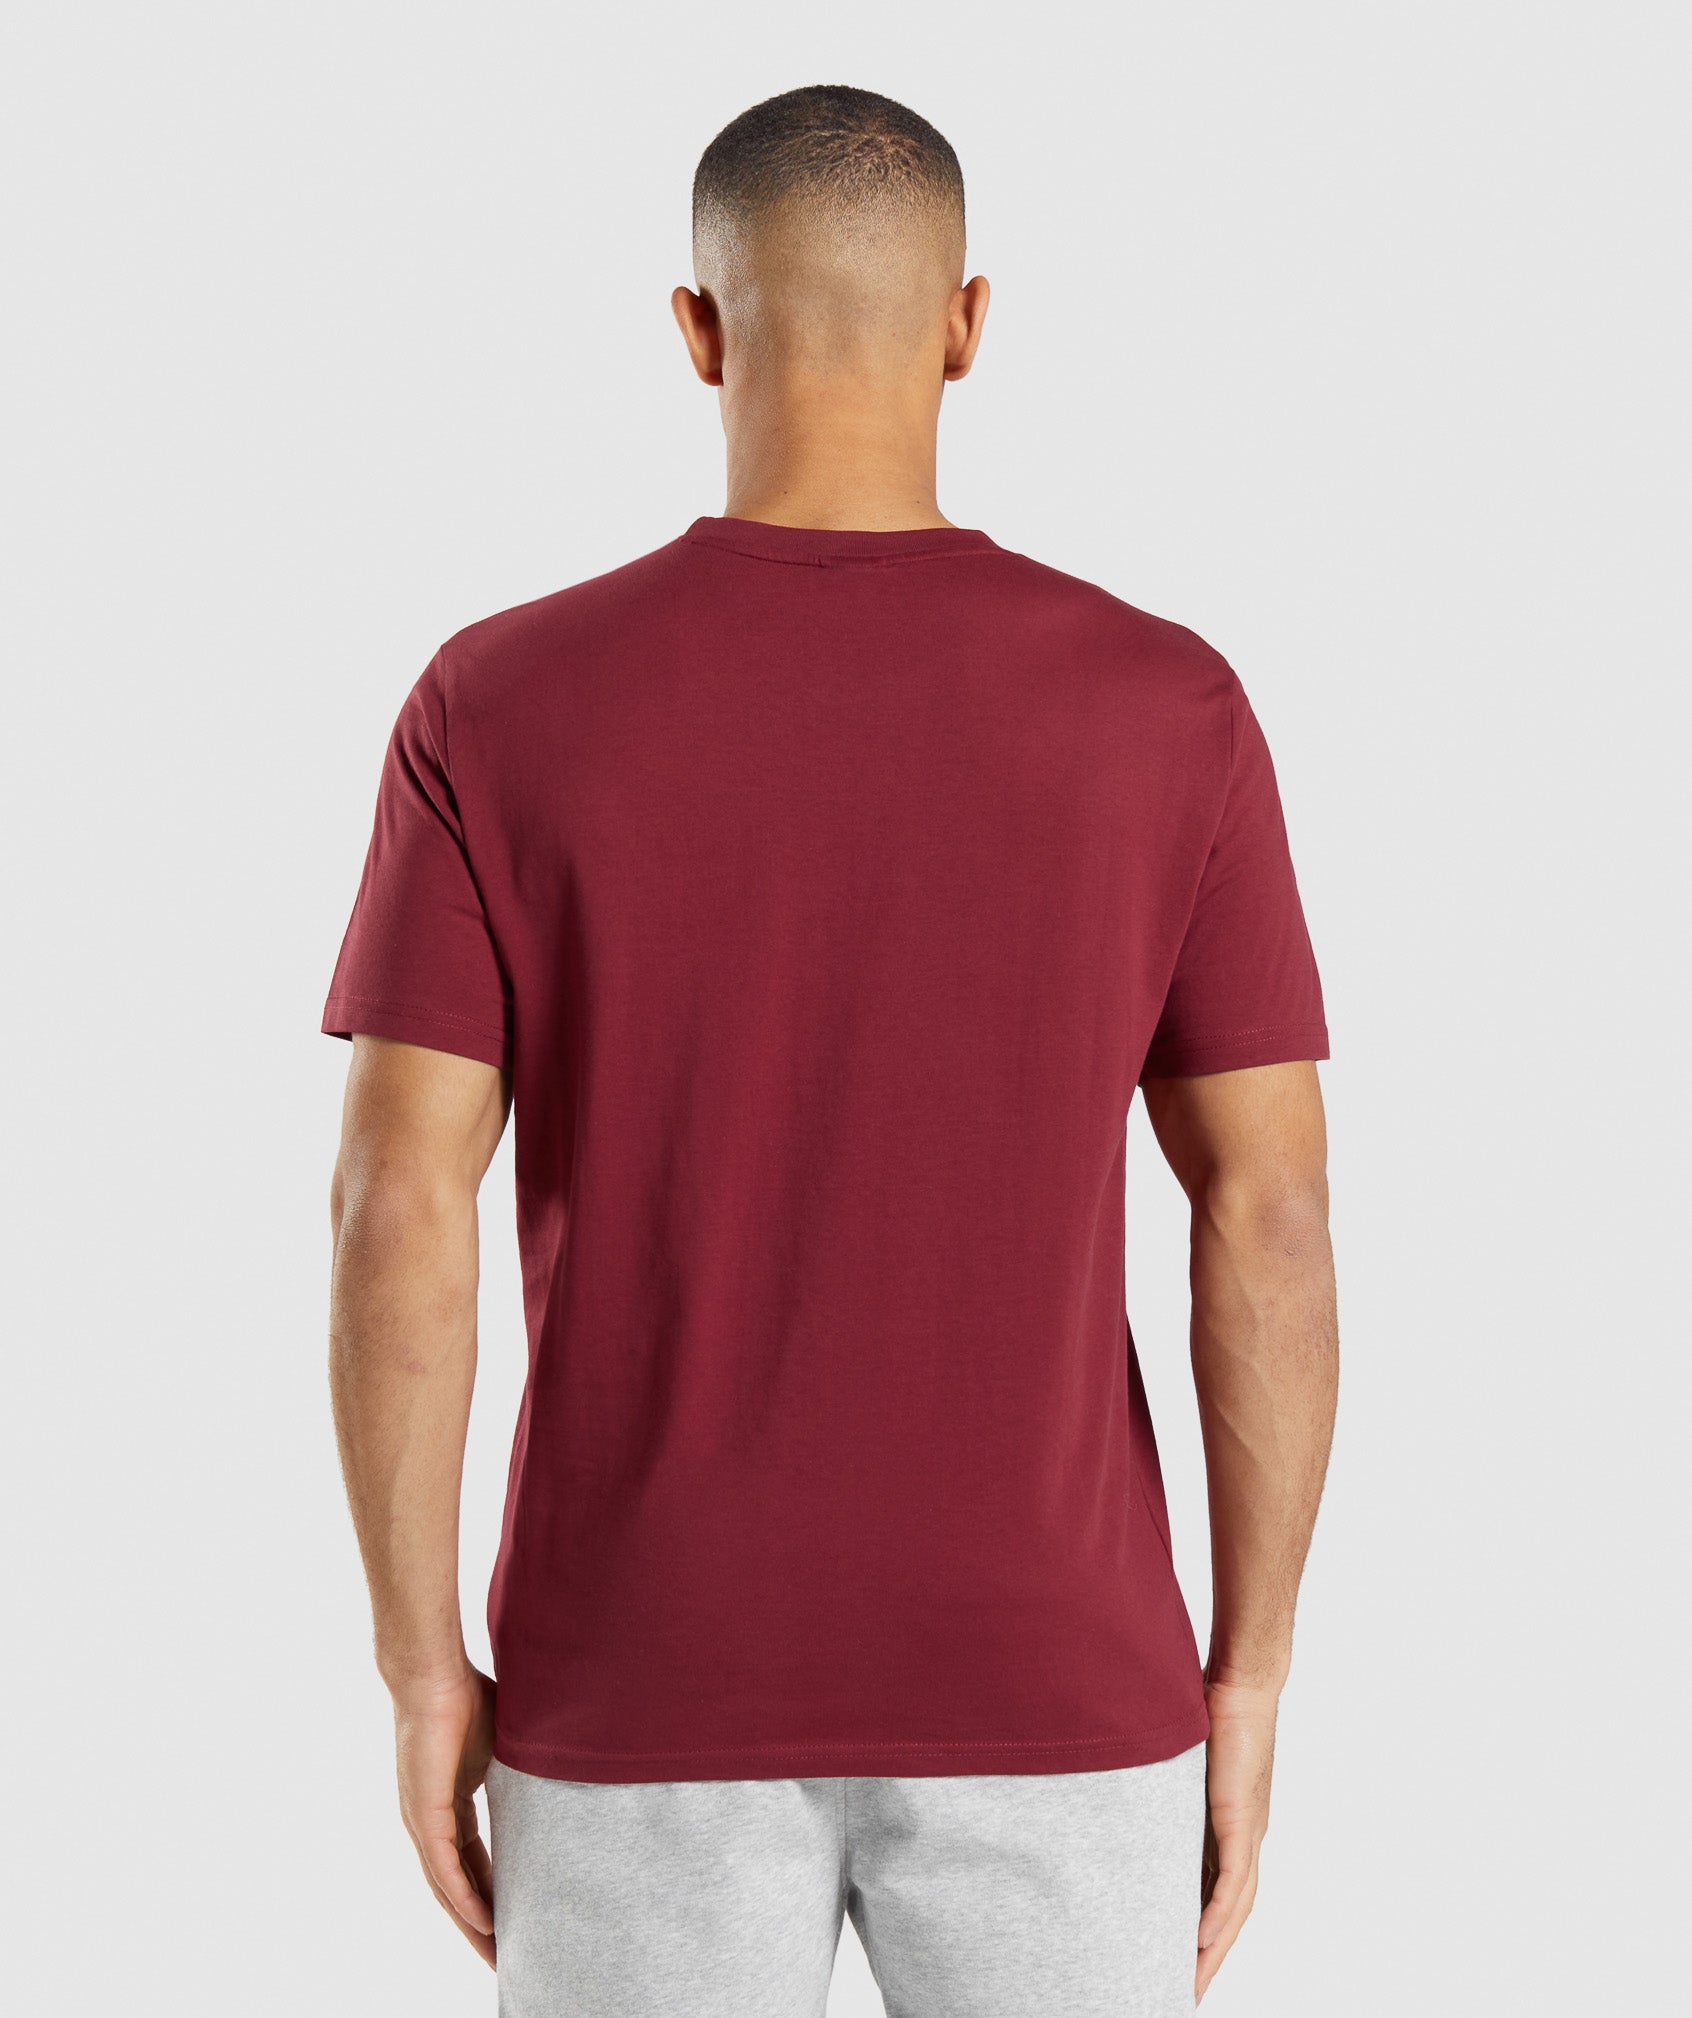 Gymshark Crest T-shirts Herren Bordeaux | 7208369-PJ